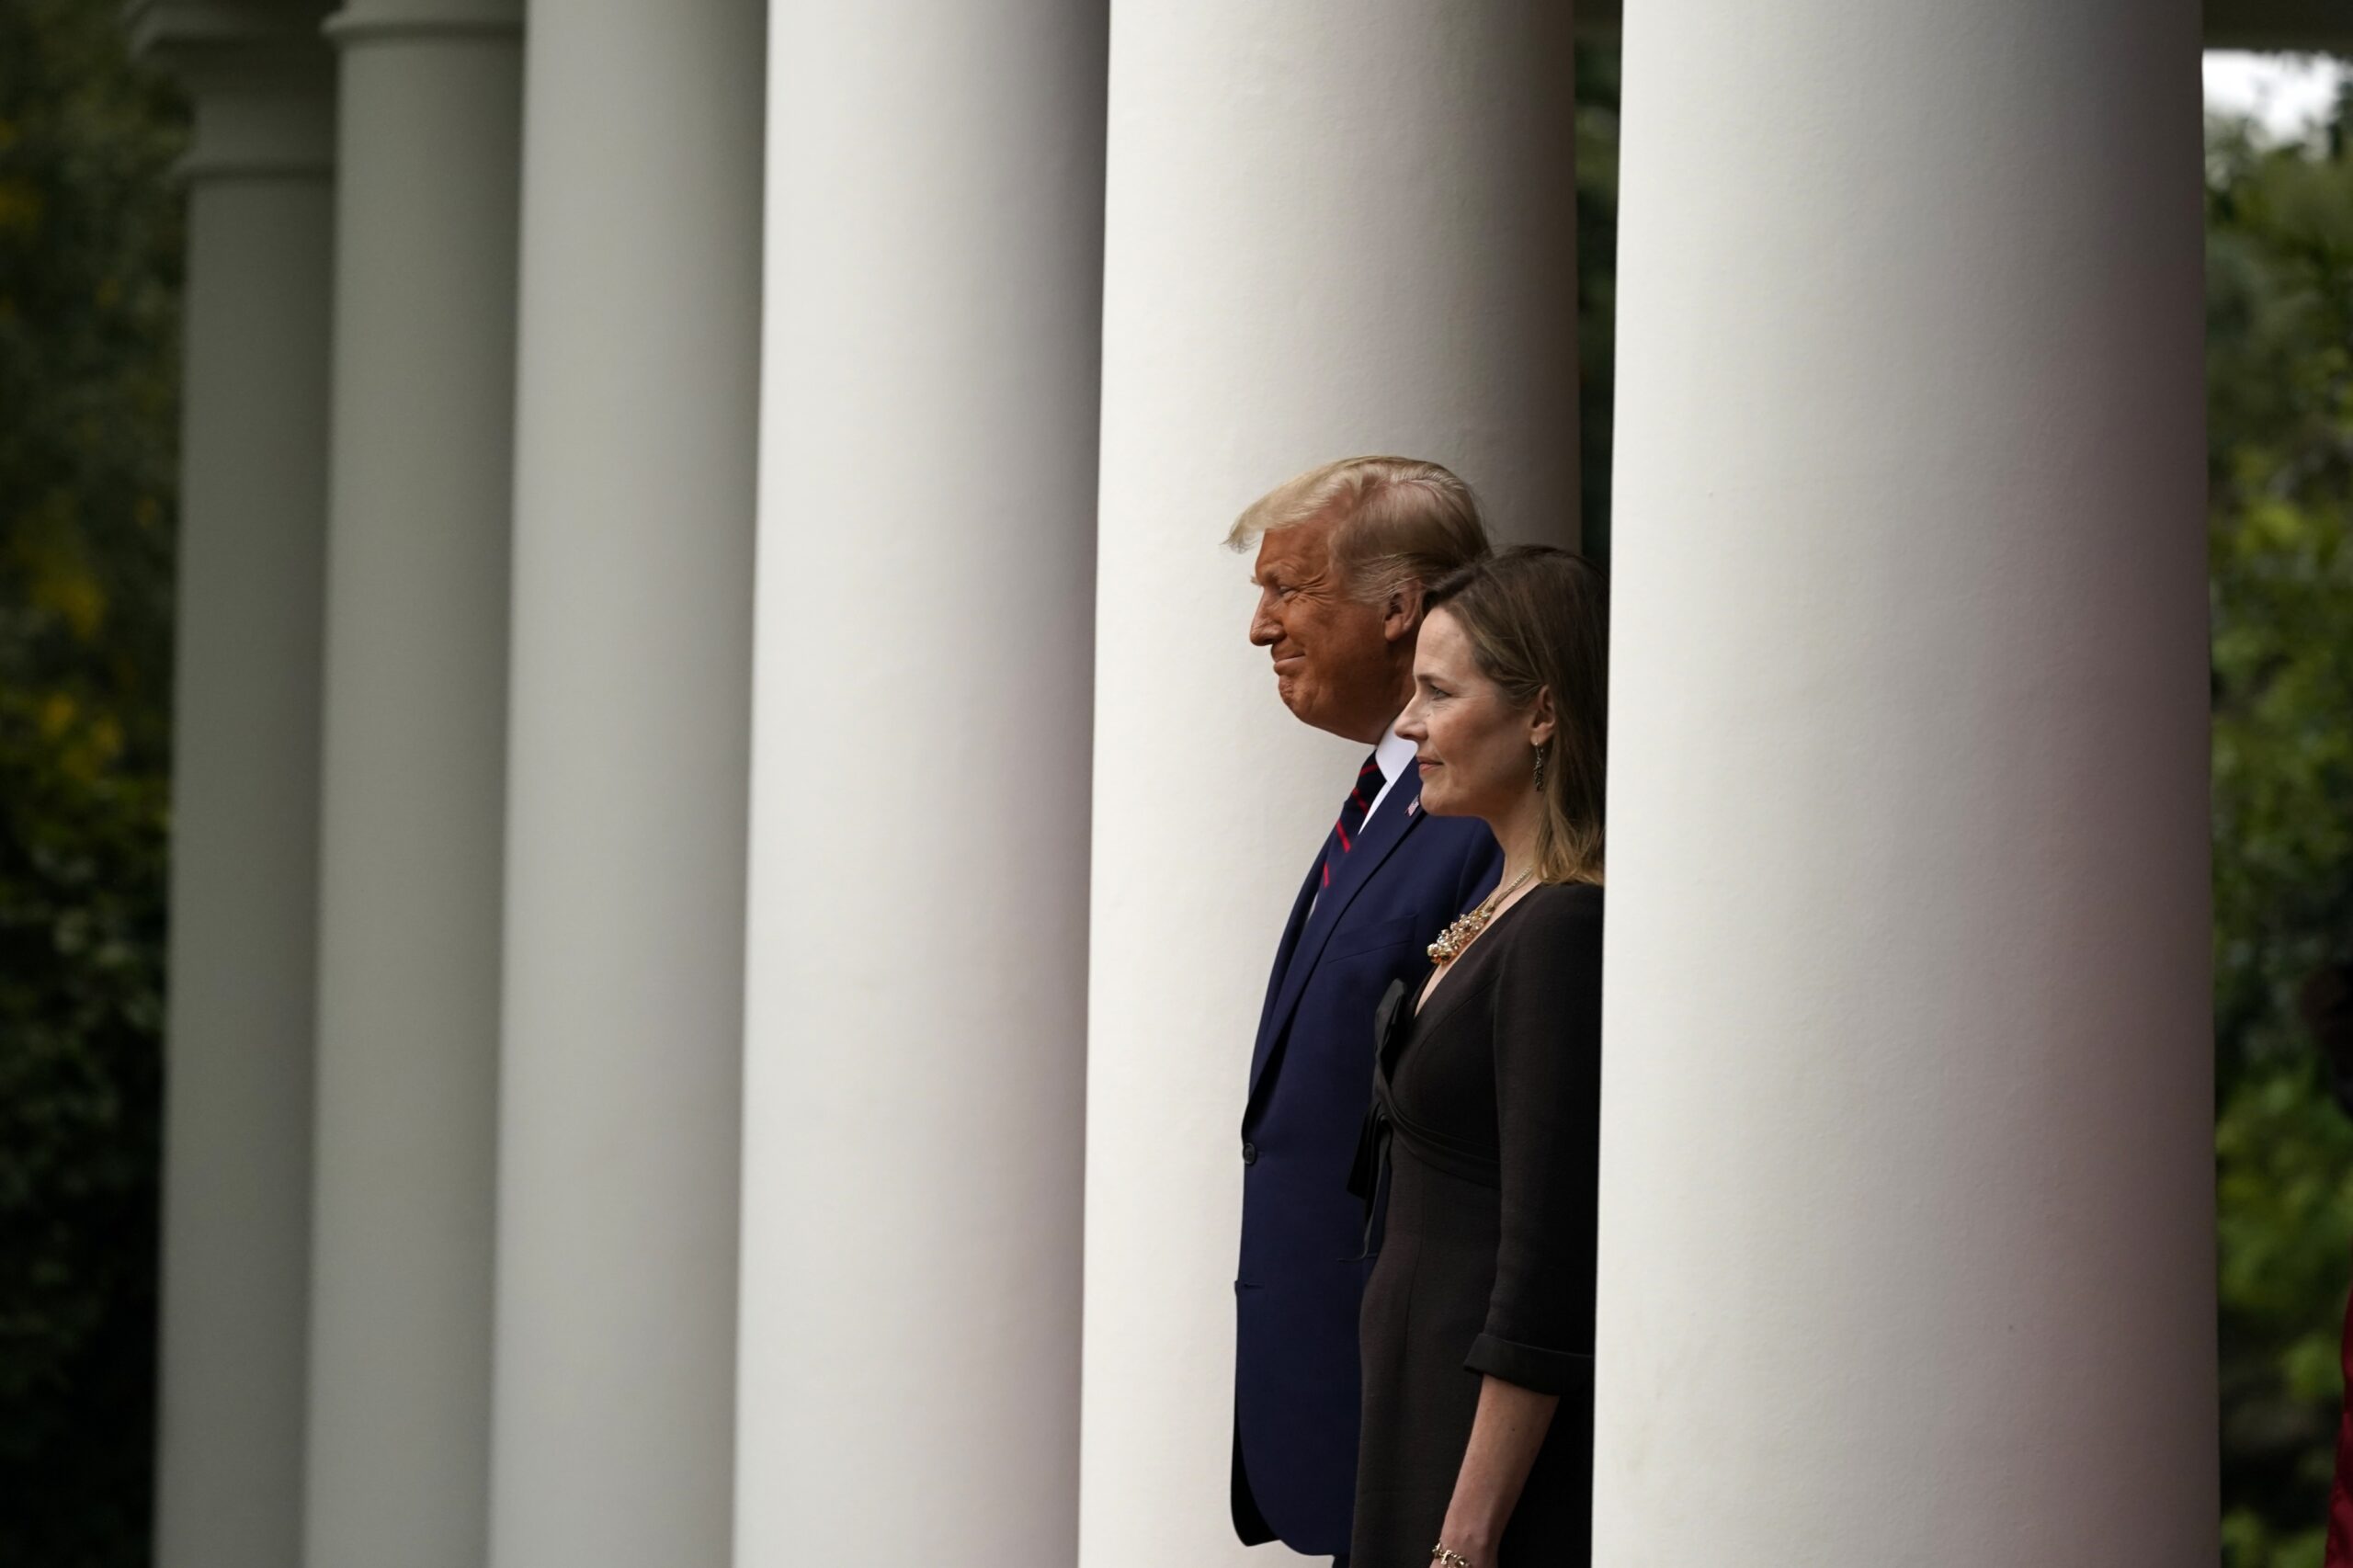 President Donald Trump walks with Judge Amy Coney Barrett